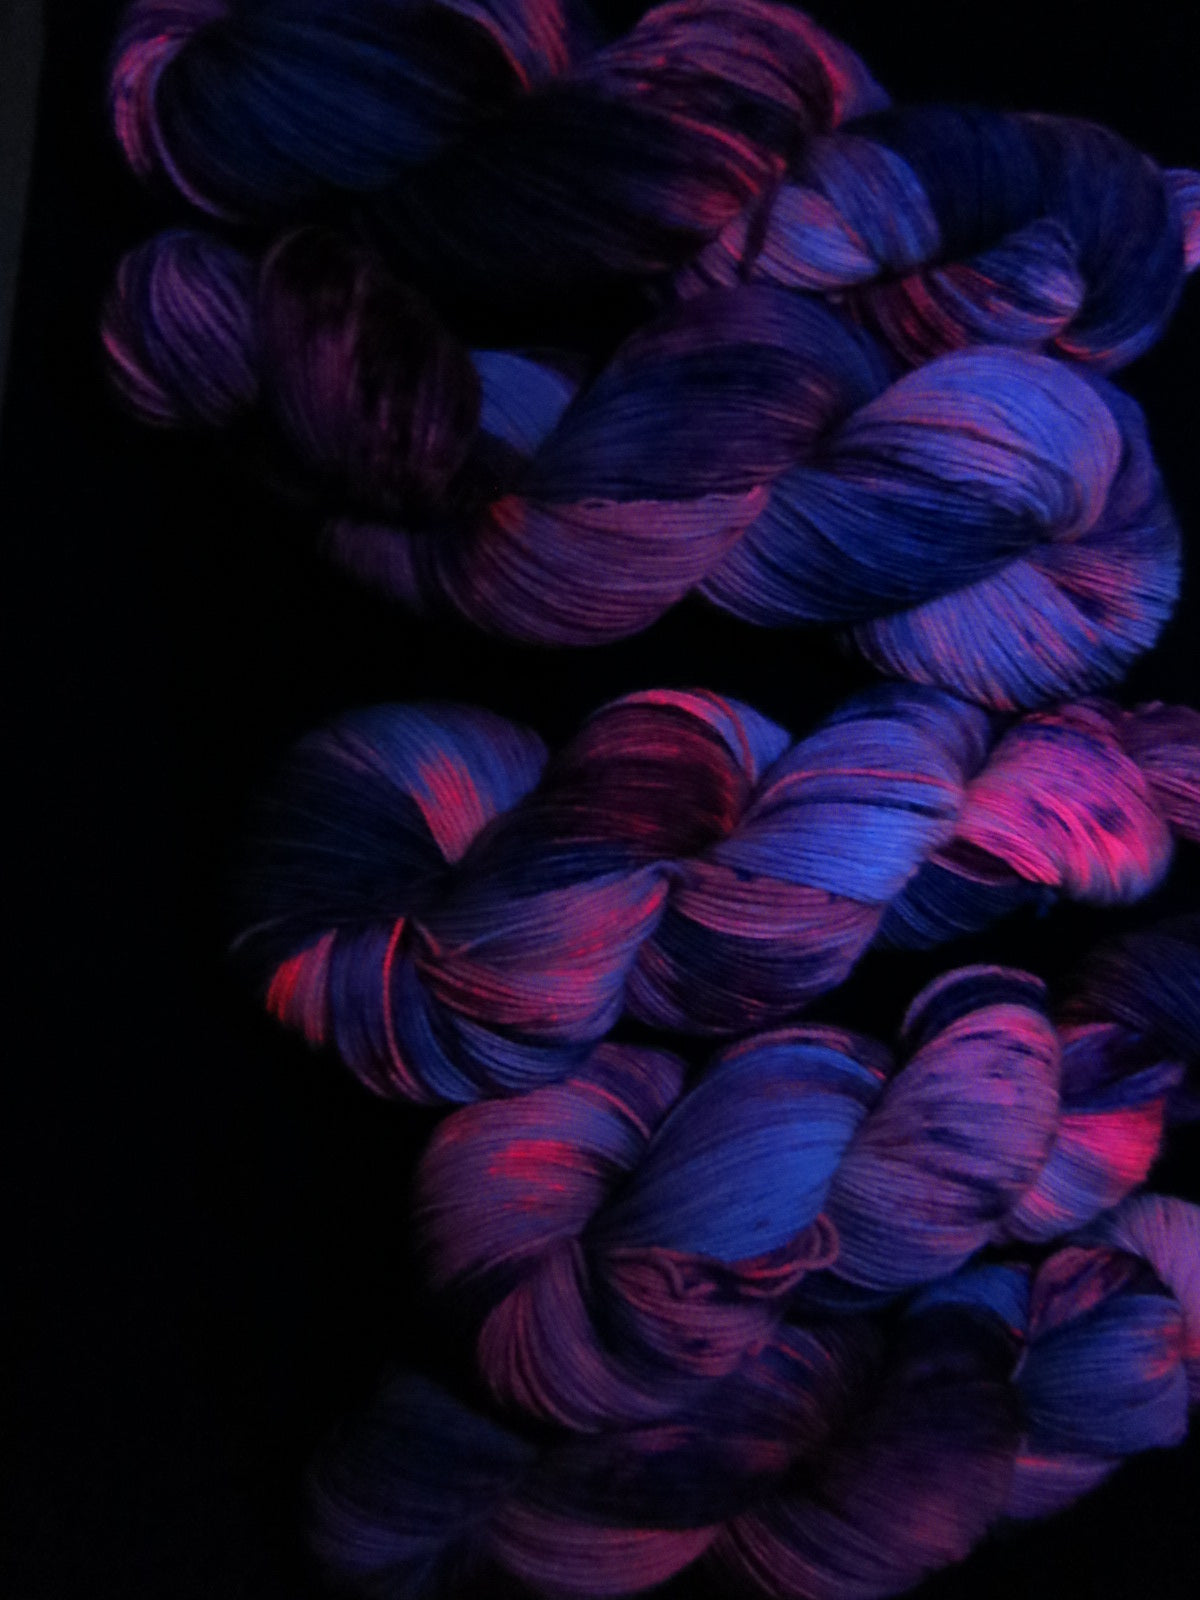 uv reactive british wool fluorescing under black light